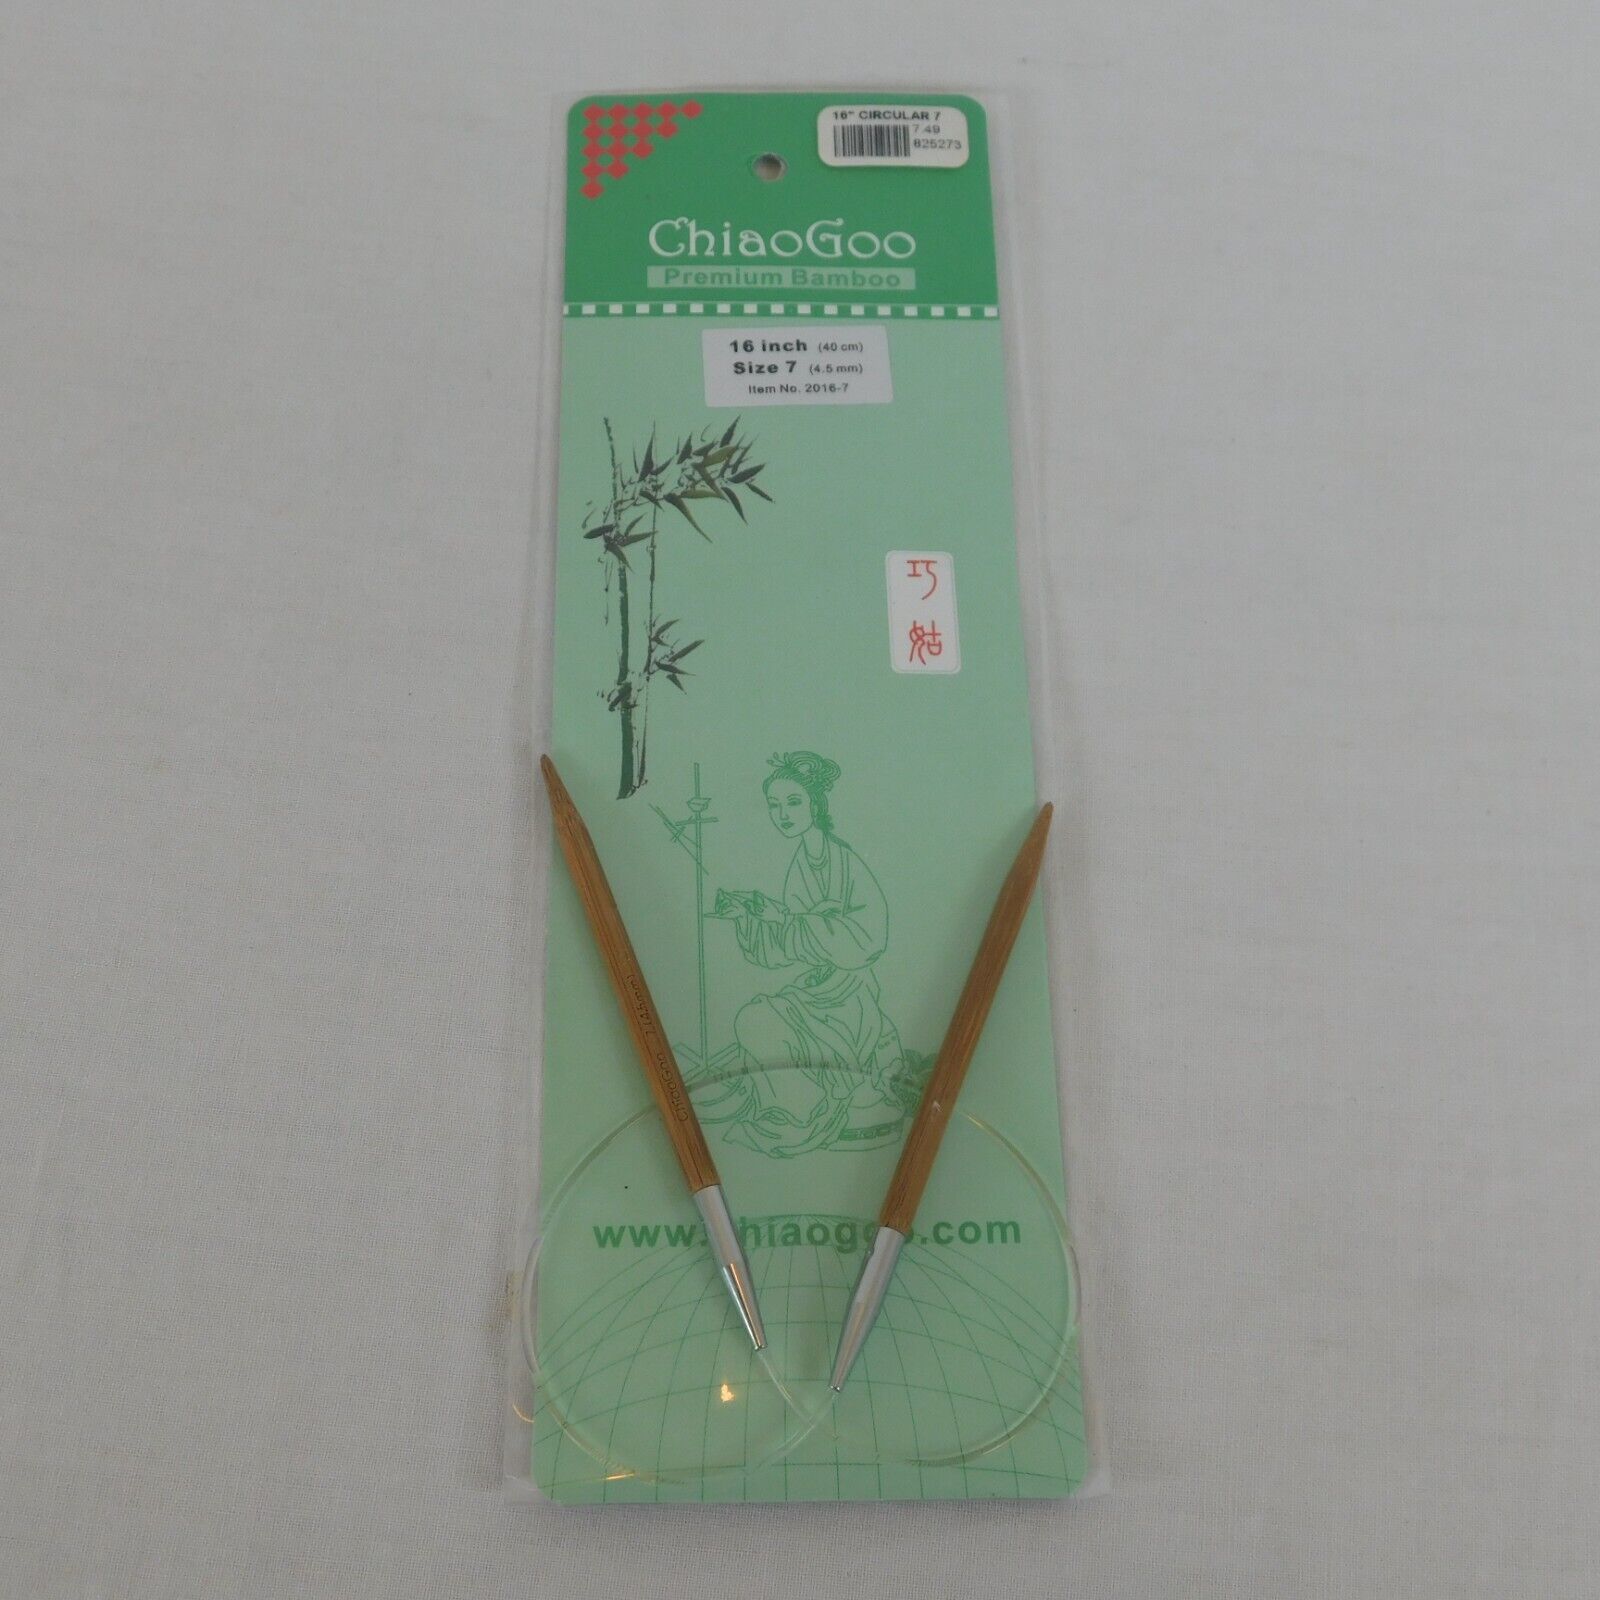 ChiaoGoo 9-Inch Red Line Circular Knitting Needles 1/2.25mm (6009